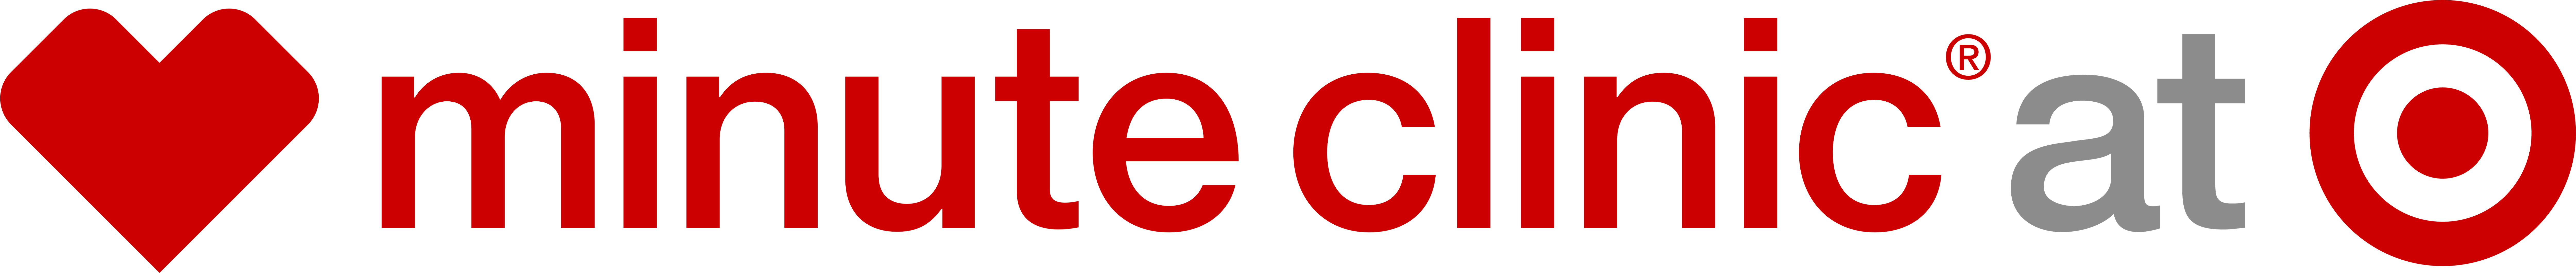 MinuteClinic at Target logo